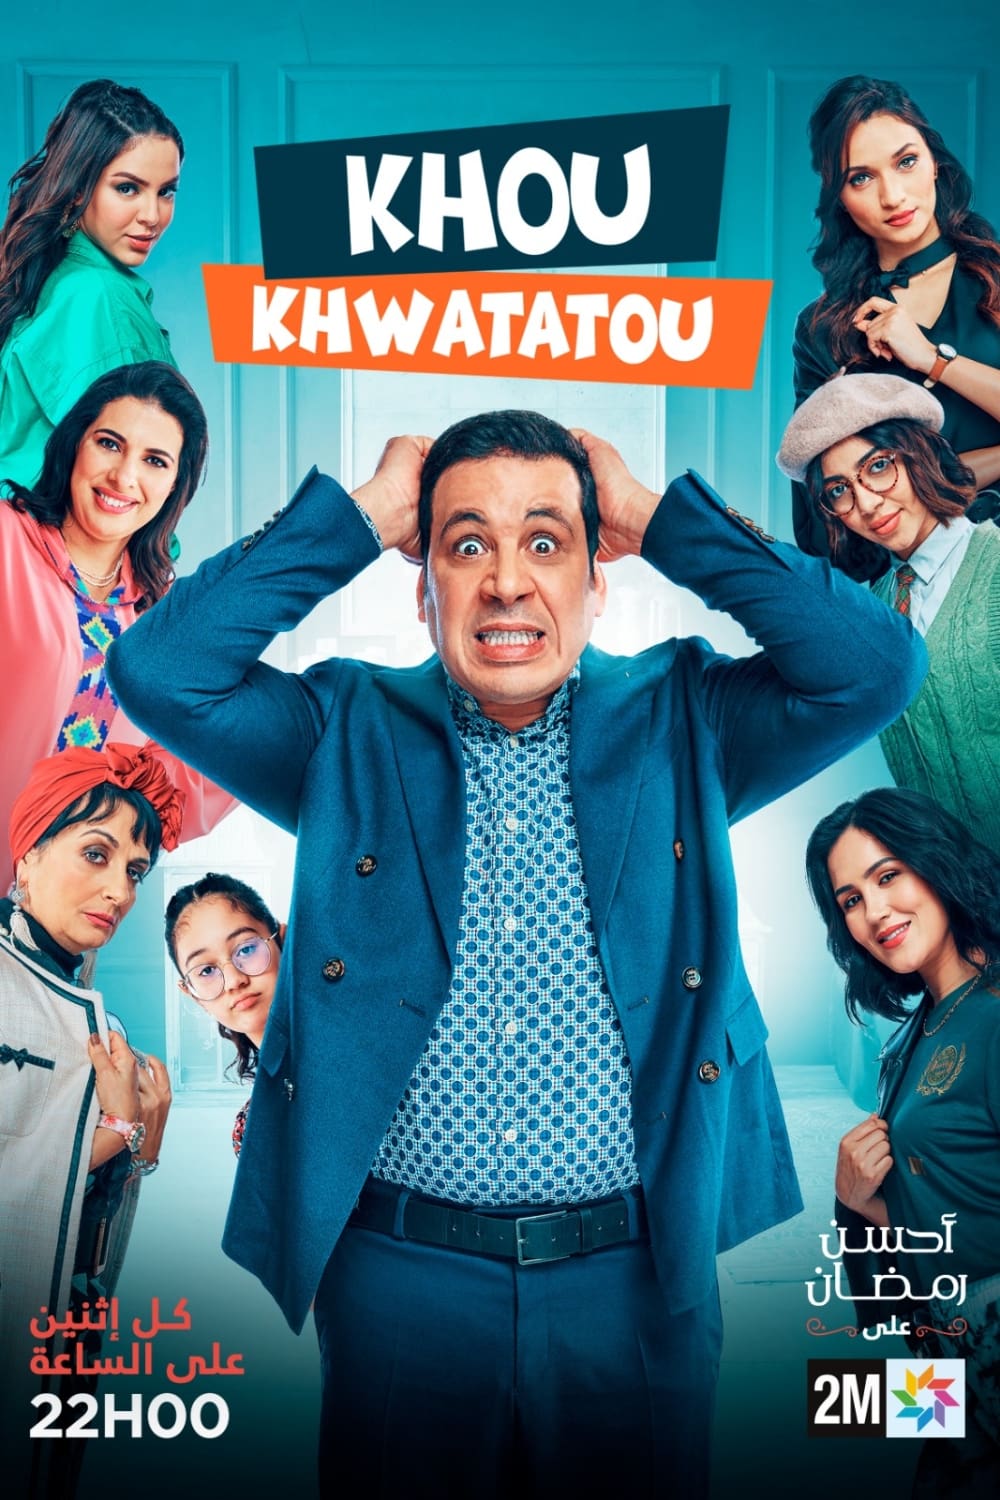 TV ratings for Khou Khwatatou (خو خواتاتو) in France. 2M TV series